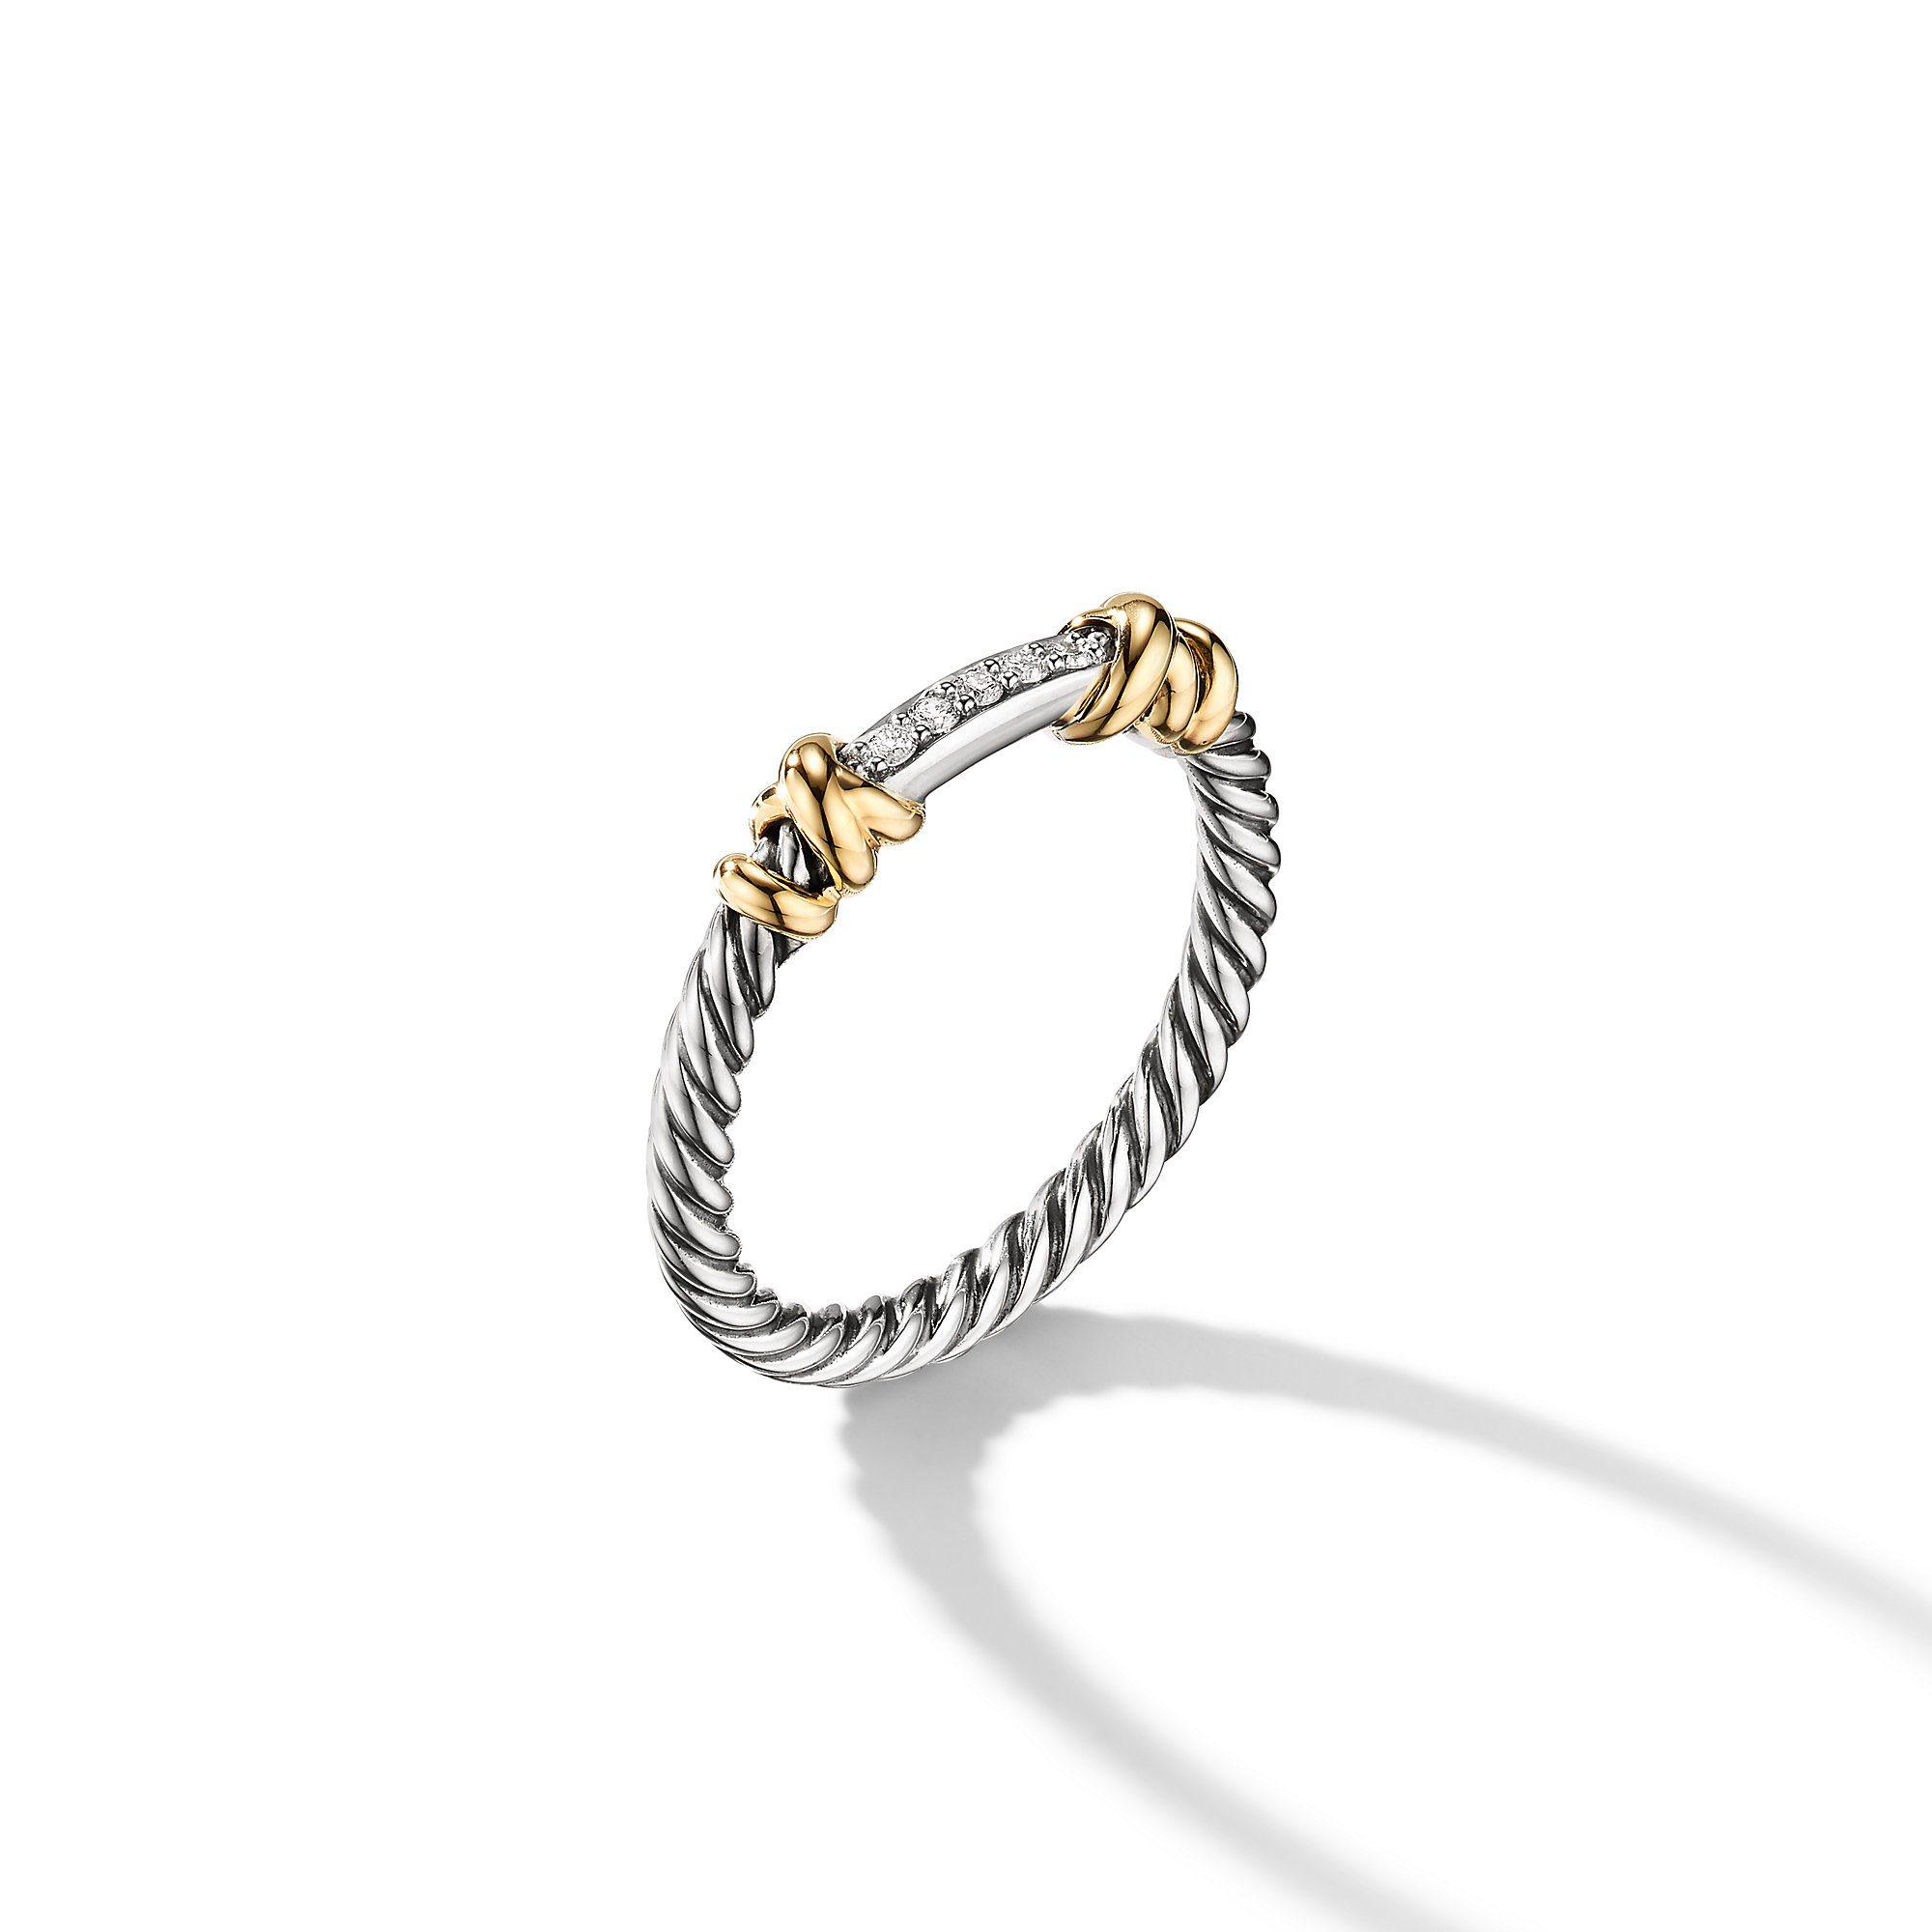 David Yurman Petite Helena Wrap Ring with 18K Yellow Gold and Diamonds | Side View 2